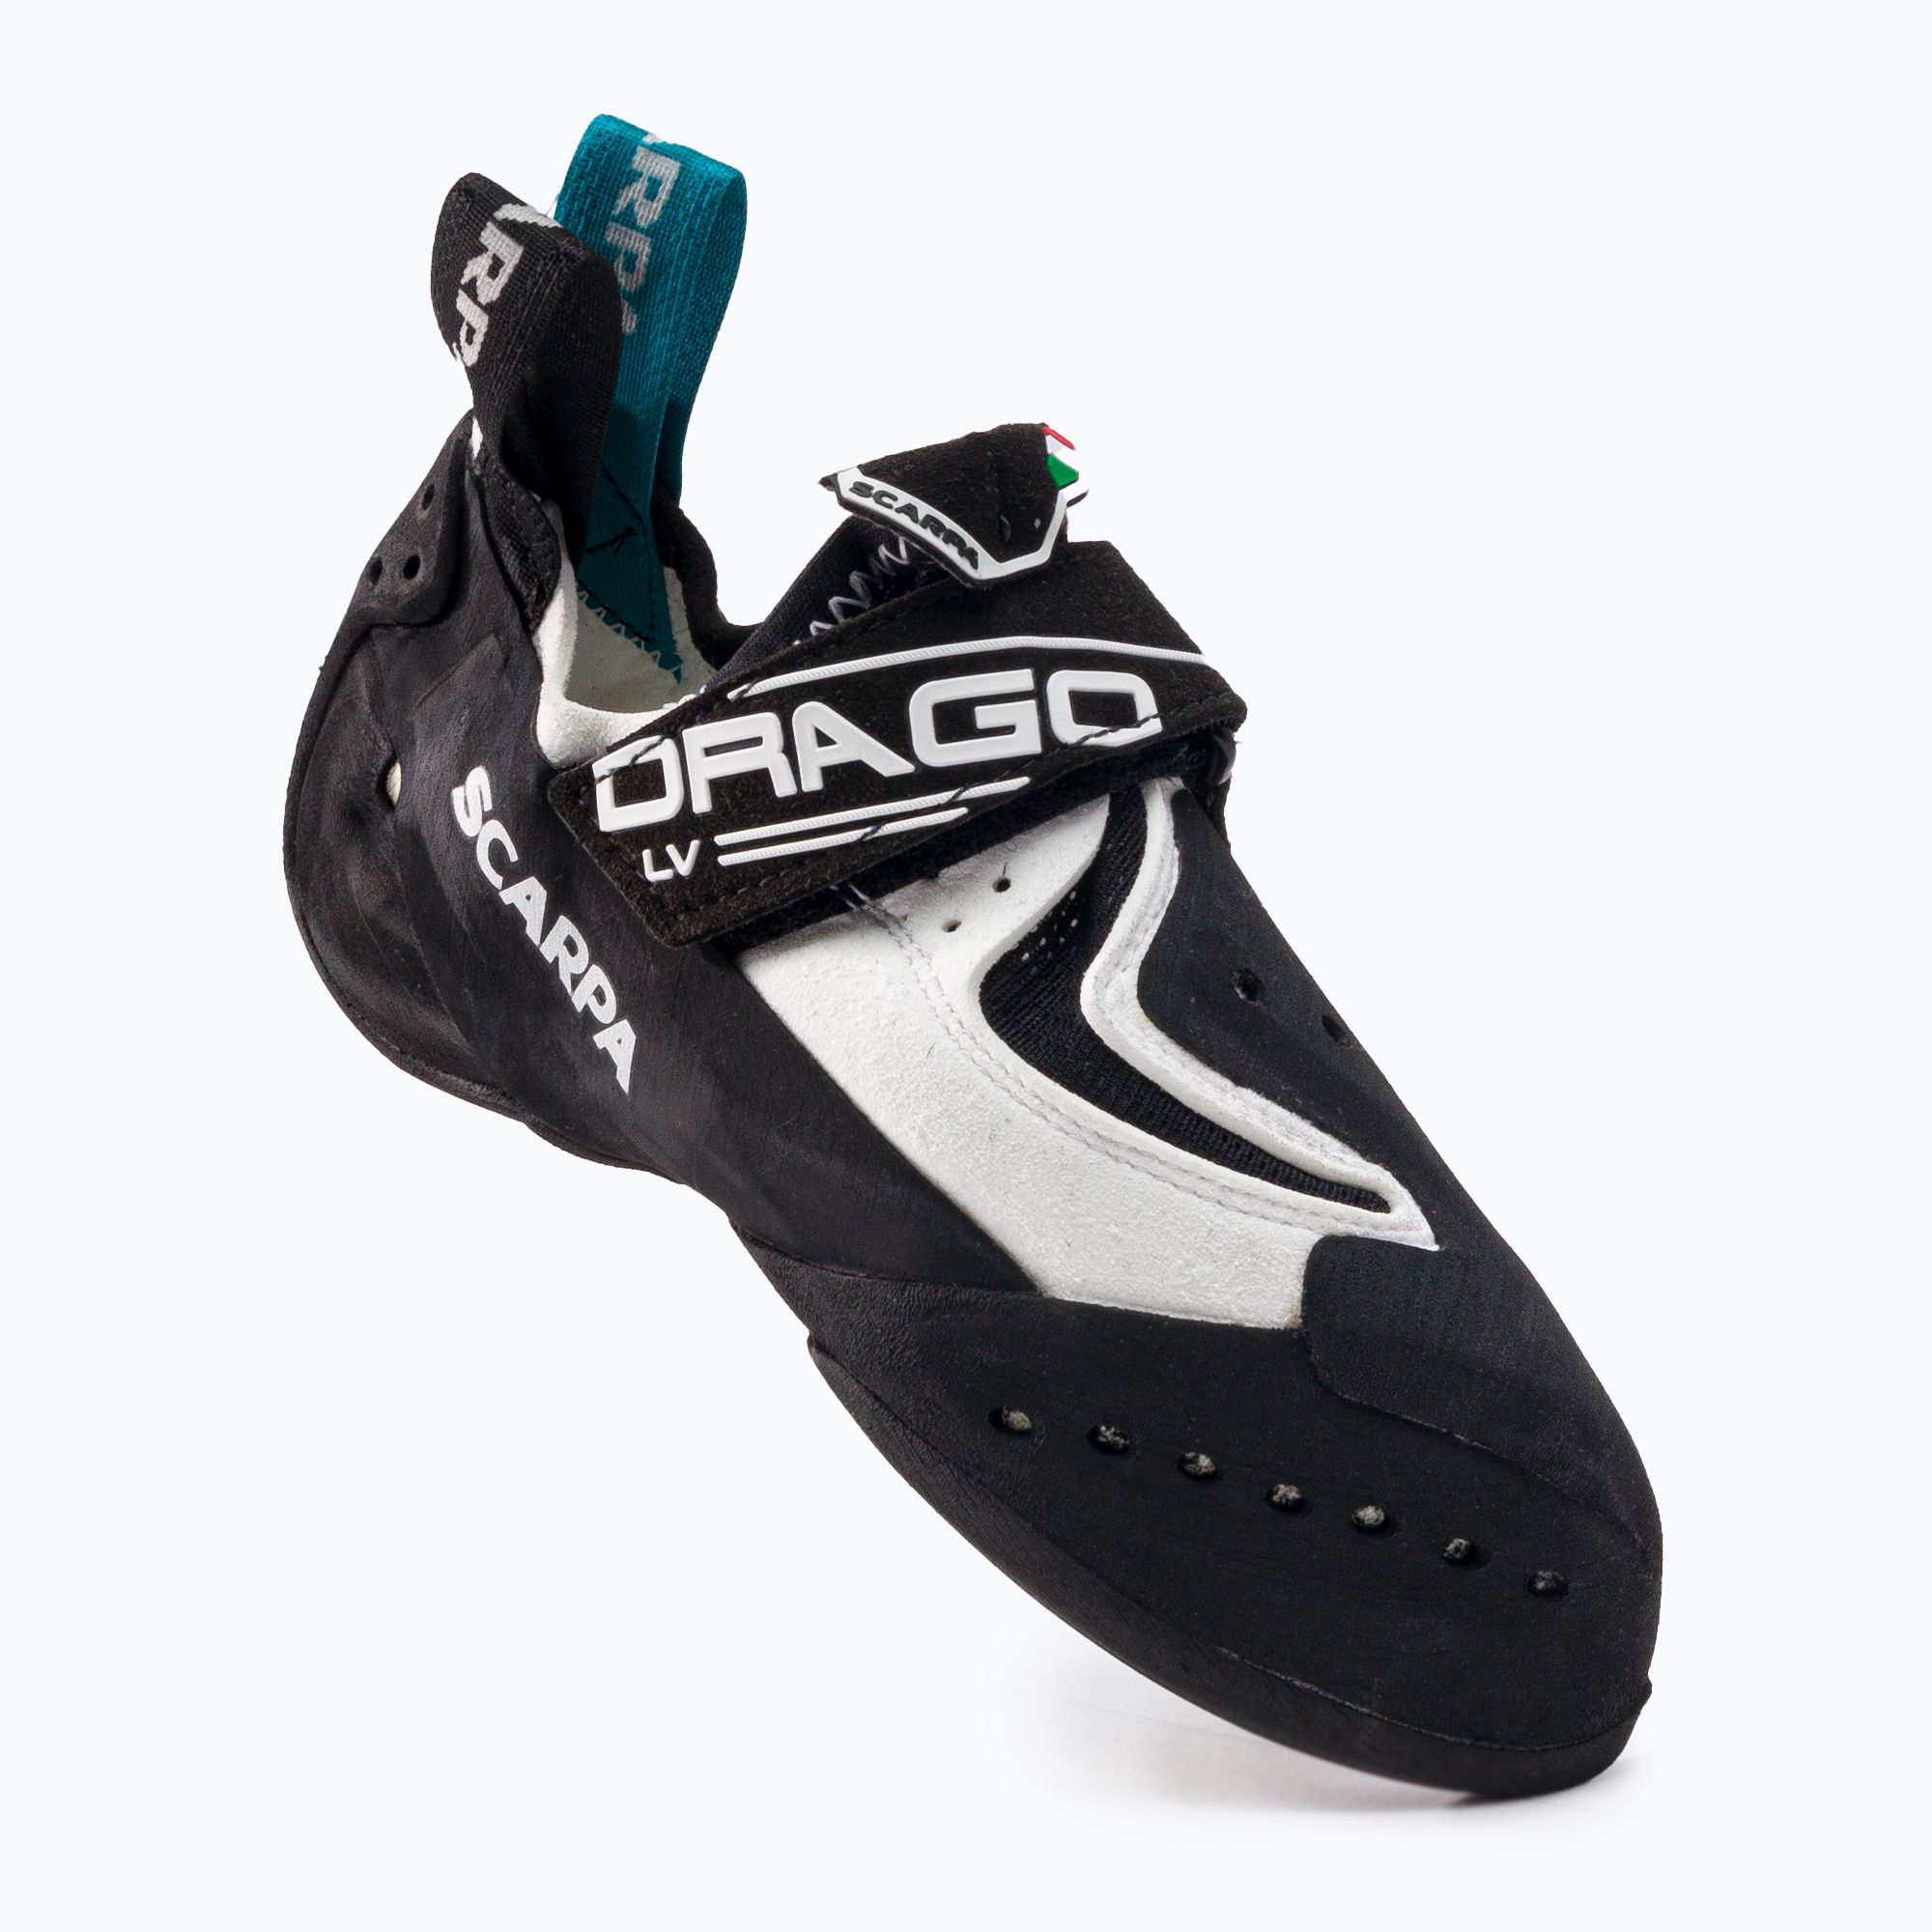 Scarpa Drago LV Climbing Shoe - 39 - White